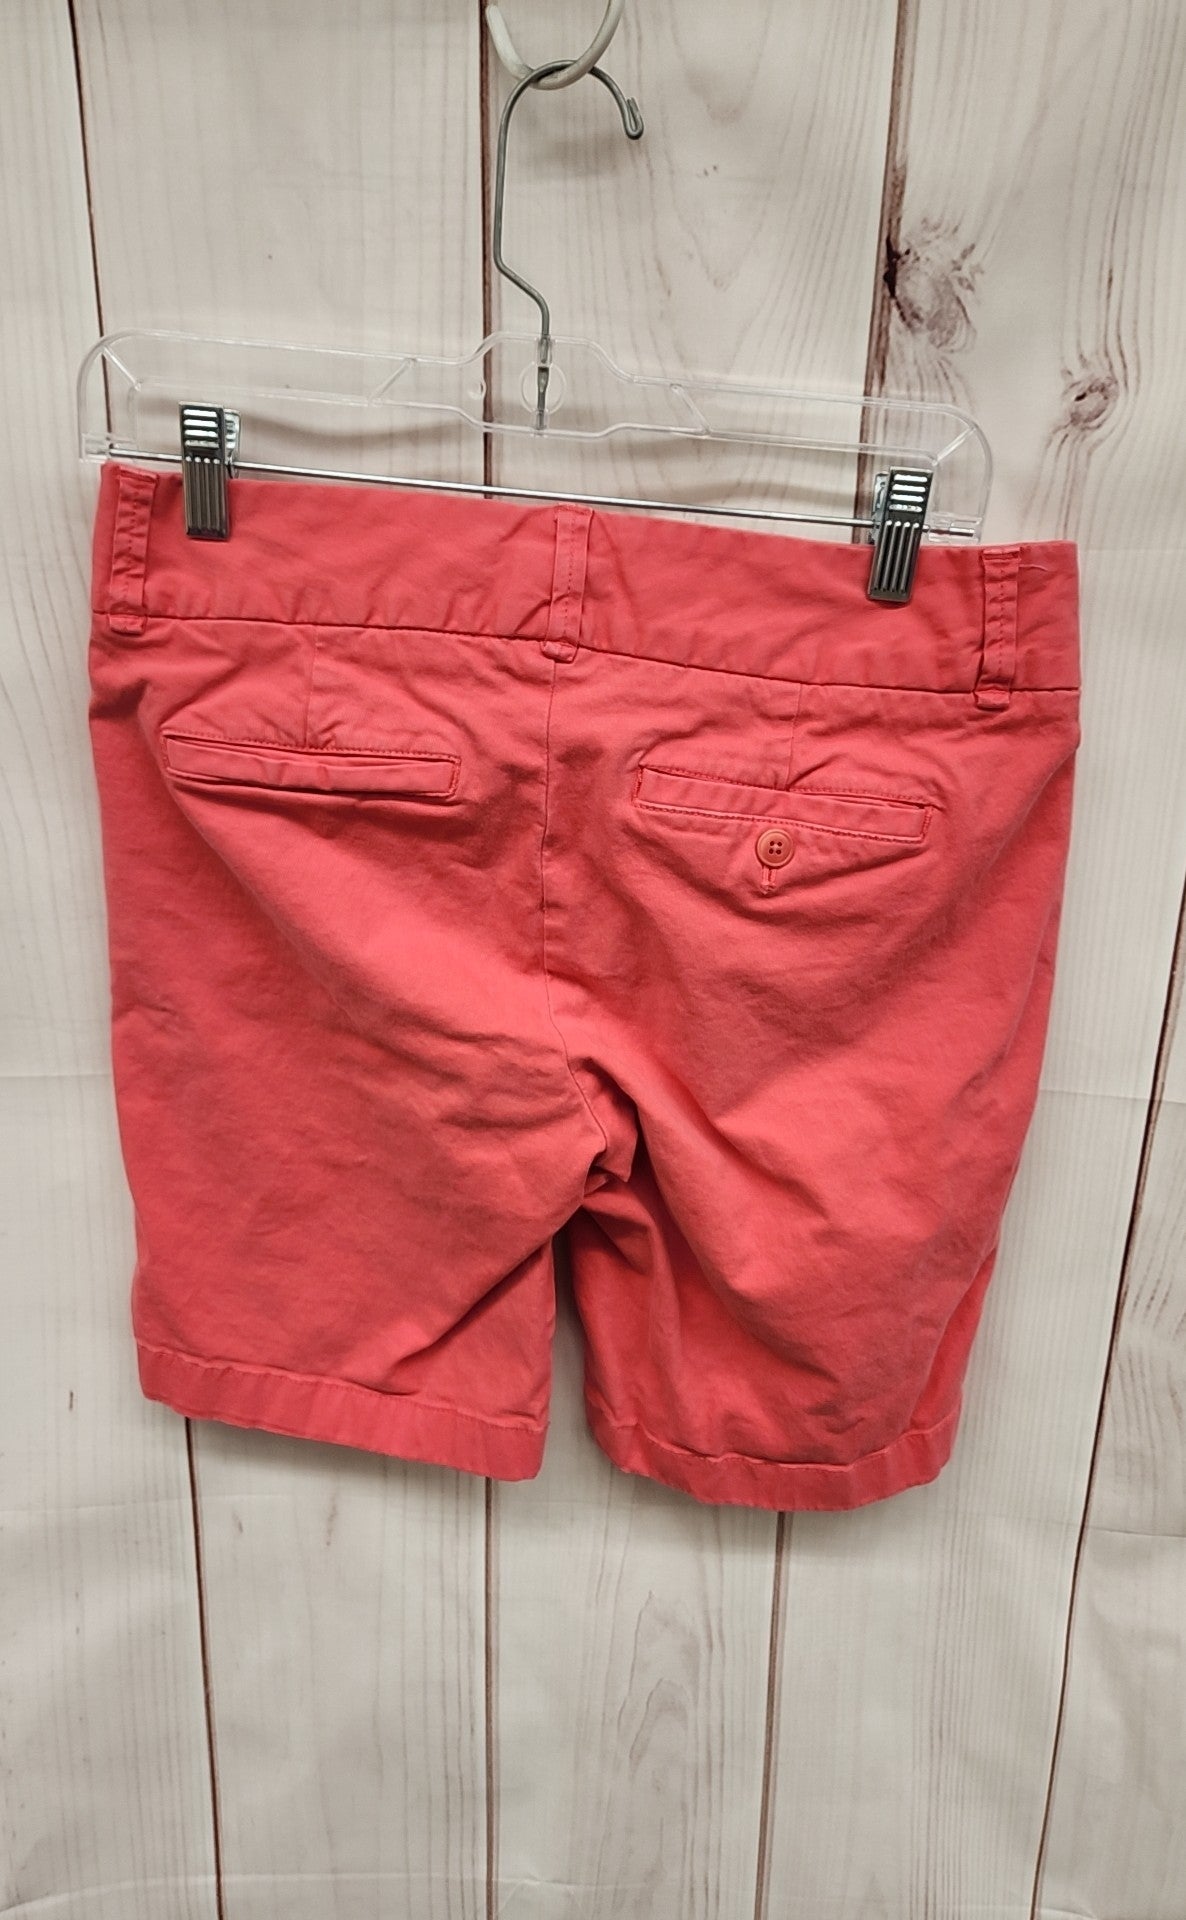 J Crew Women's Size 4 Pink Shorts